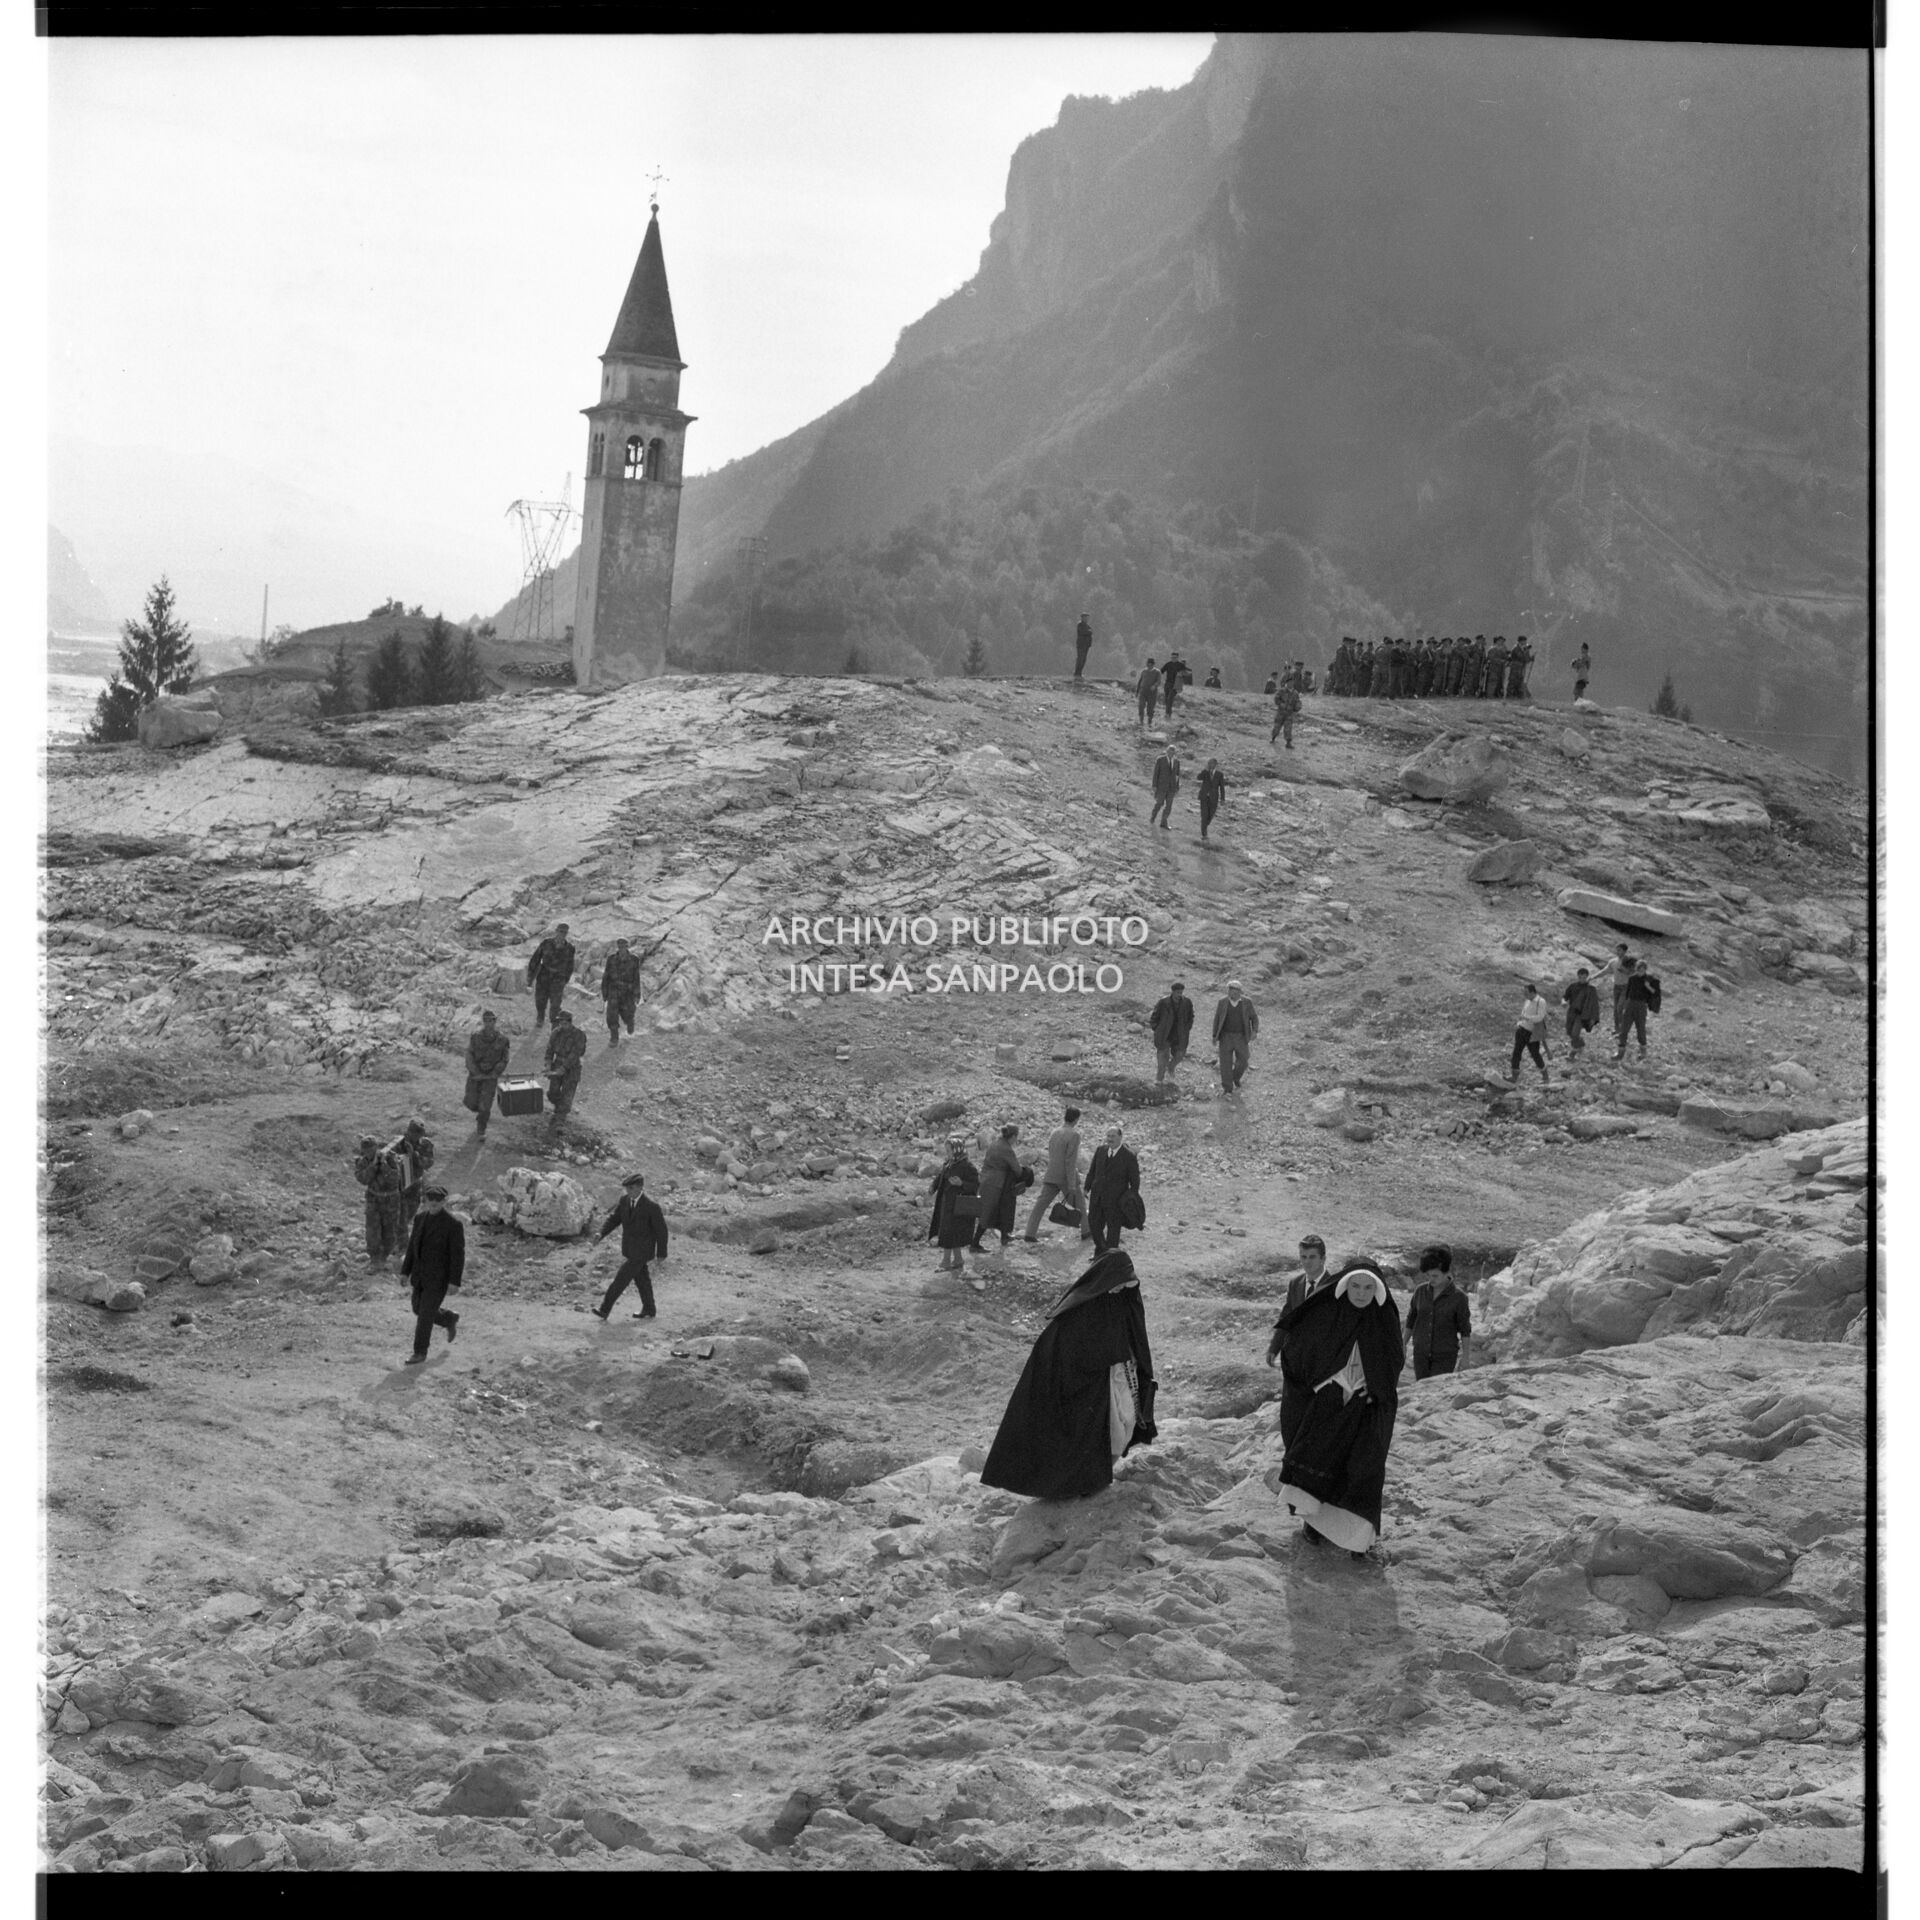 The Vajont Dam Disaster: destruction of Pirago di Longarone